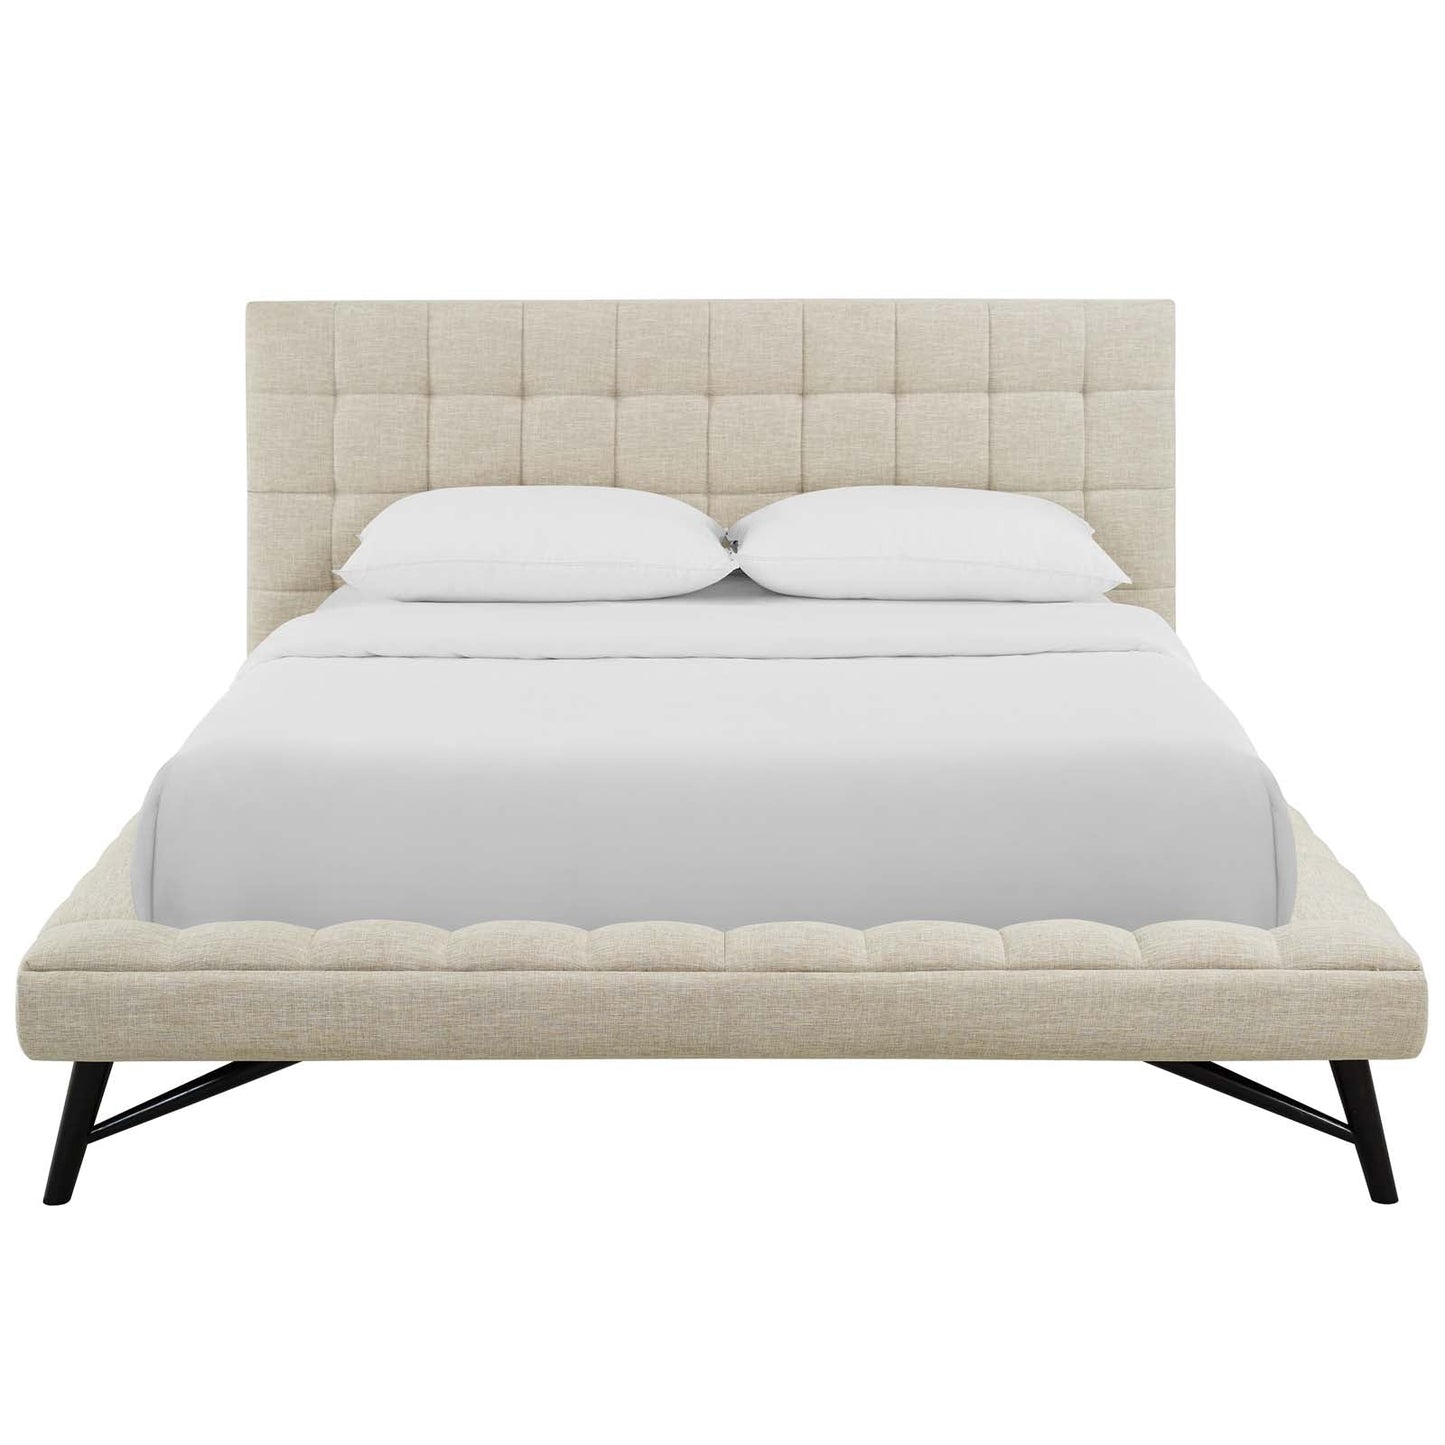 Modway Beds & Bed Frames Julia Queen Biscuit Tufted Upholstered Fabric Platform Bed